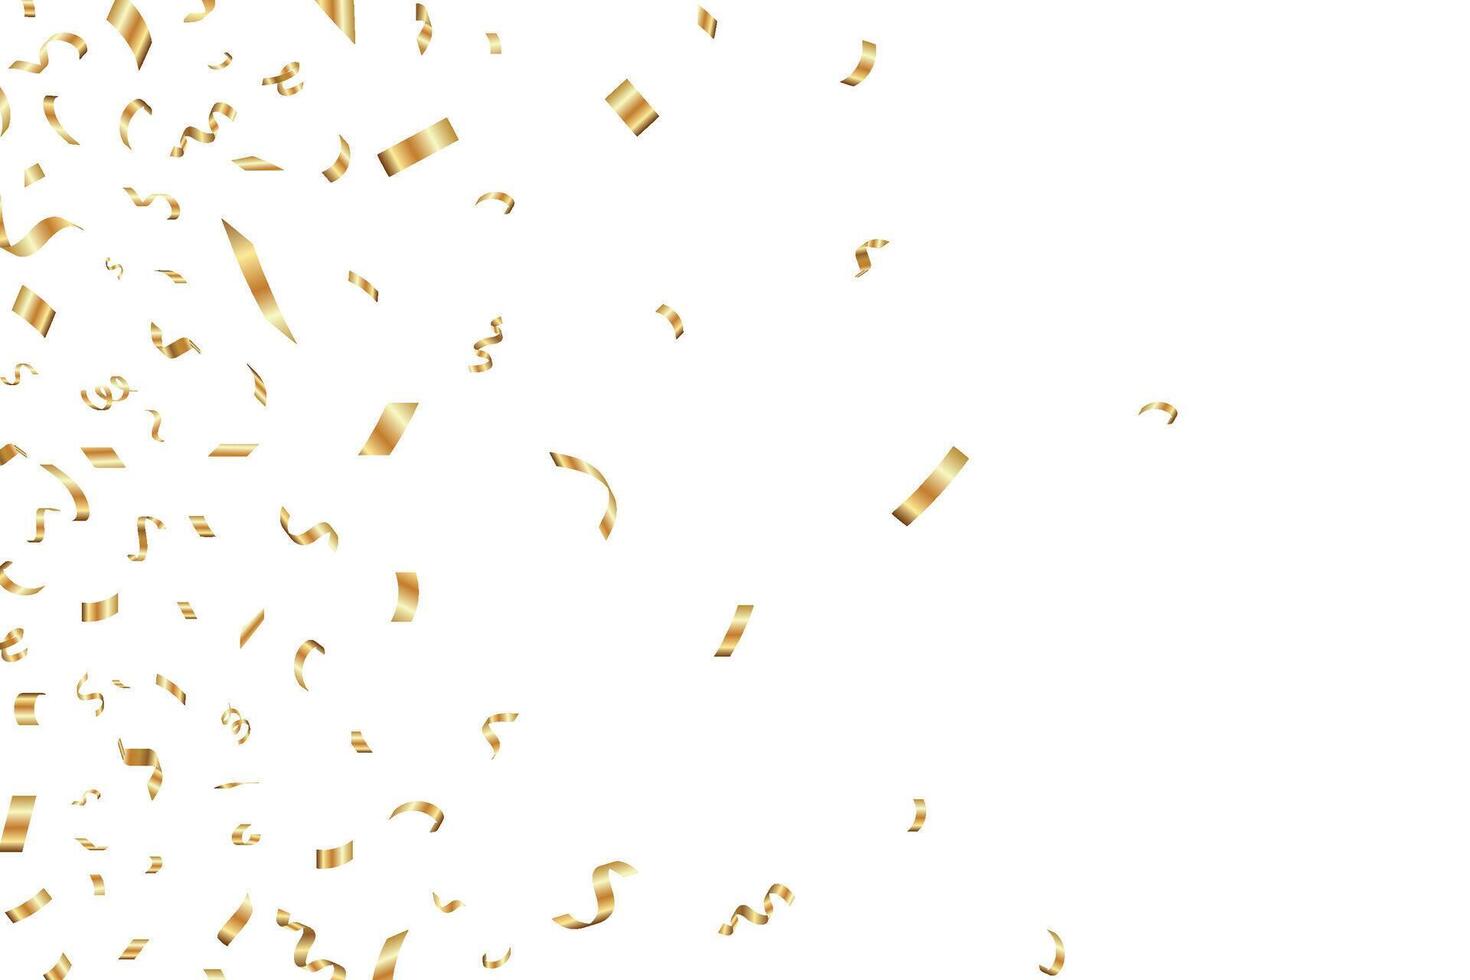 Gold confetti falling background for birthday, anniversary designs. Bright shiny gold confetti for party vector